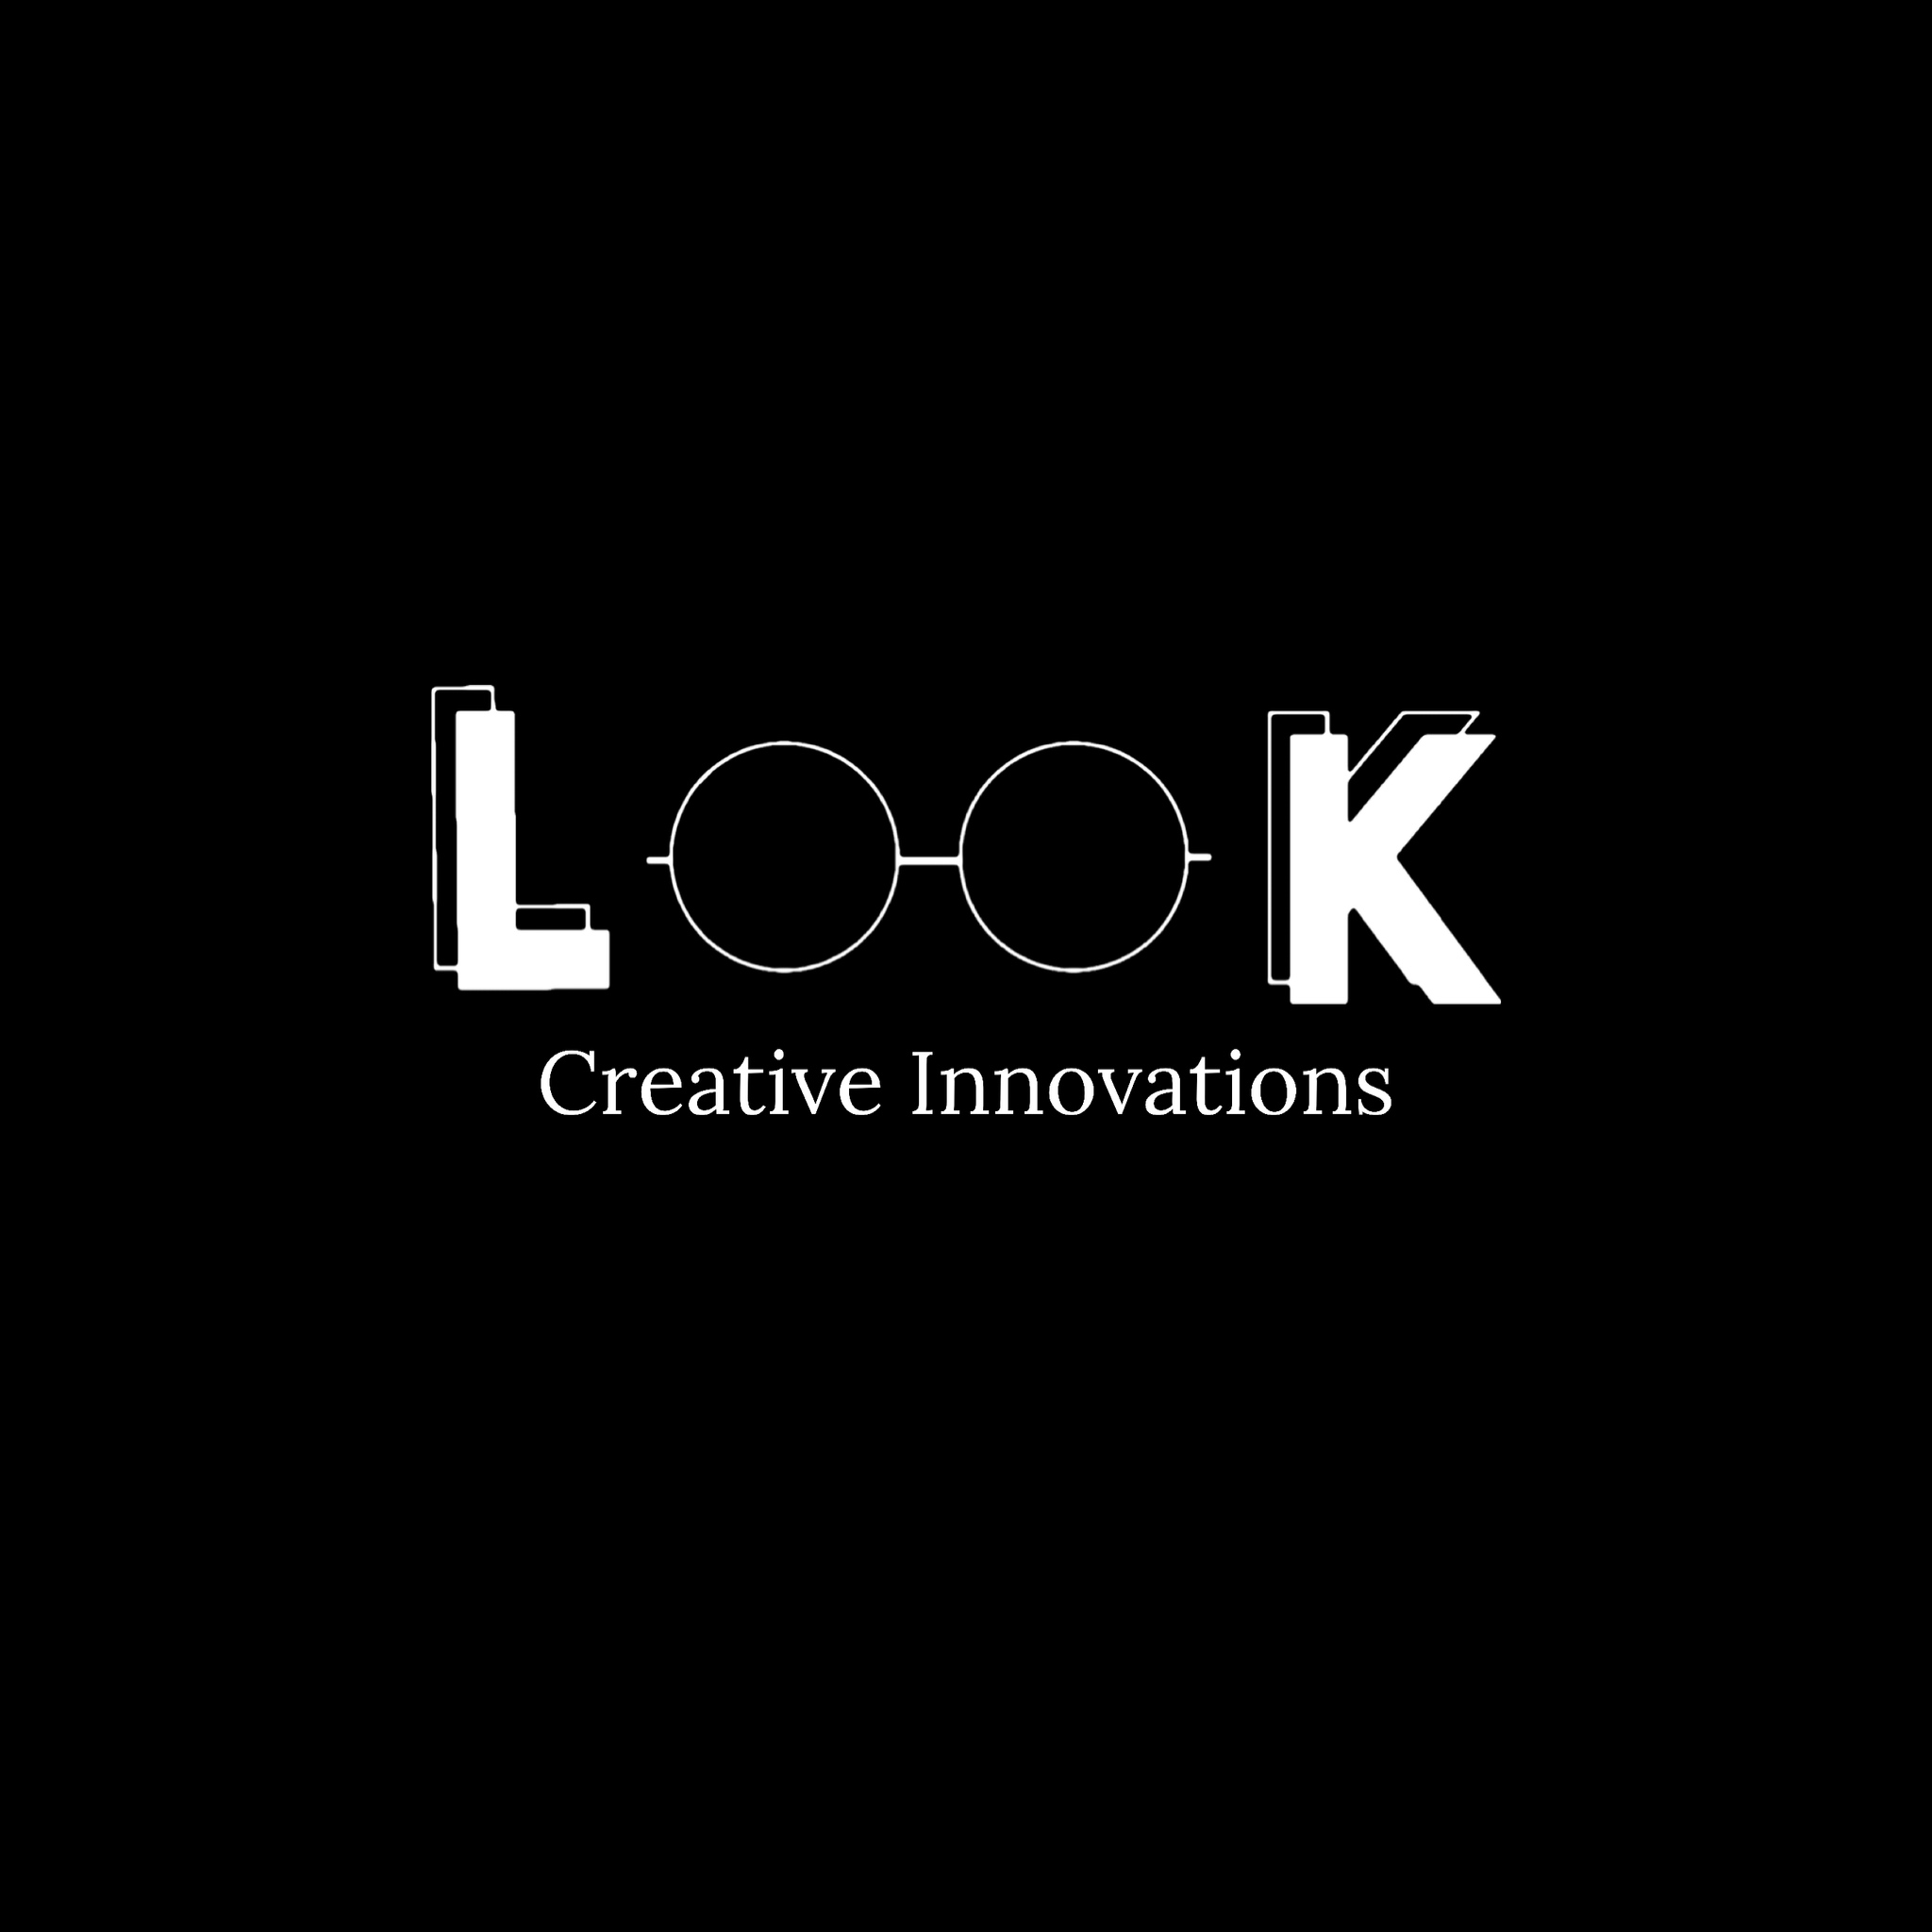 LOOK Creative Innovations 